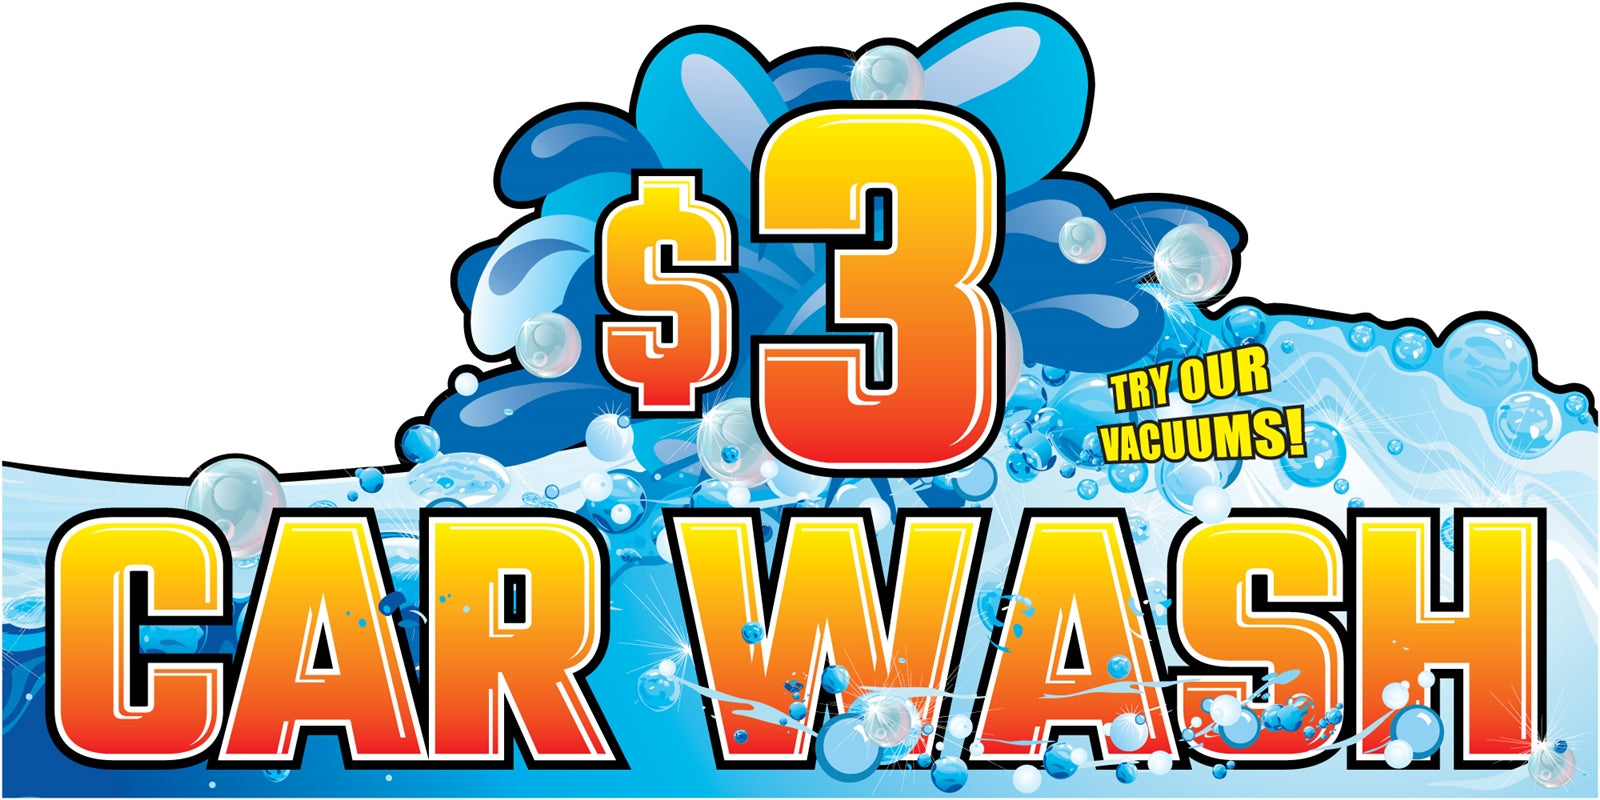 Die-Cut Sign "$3 Carwash"